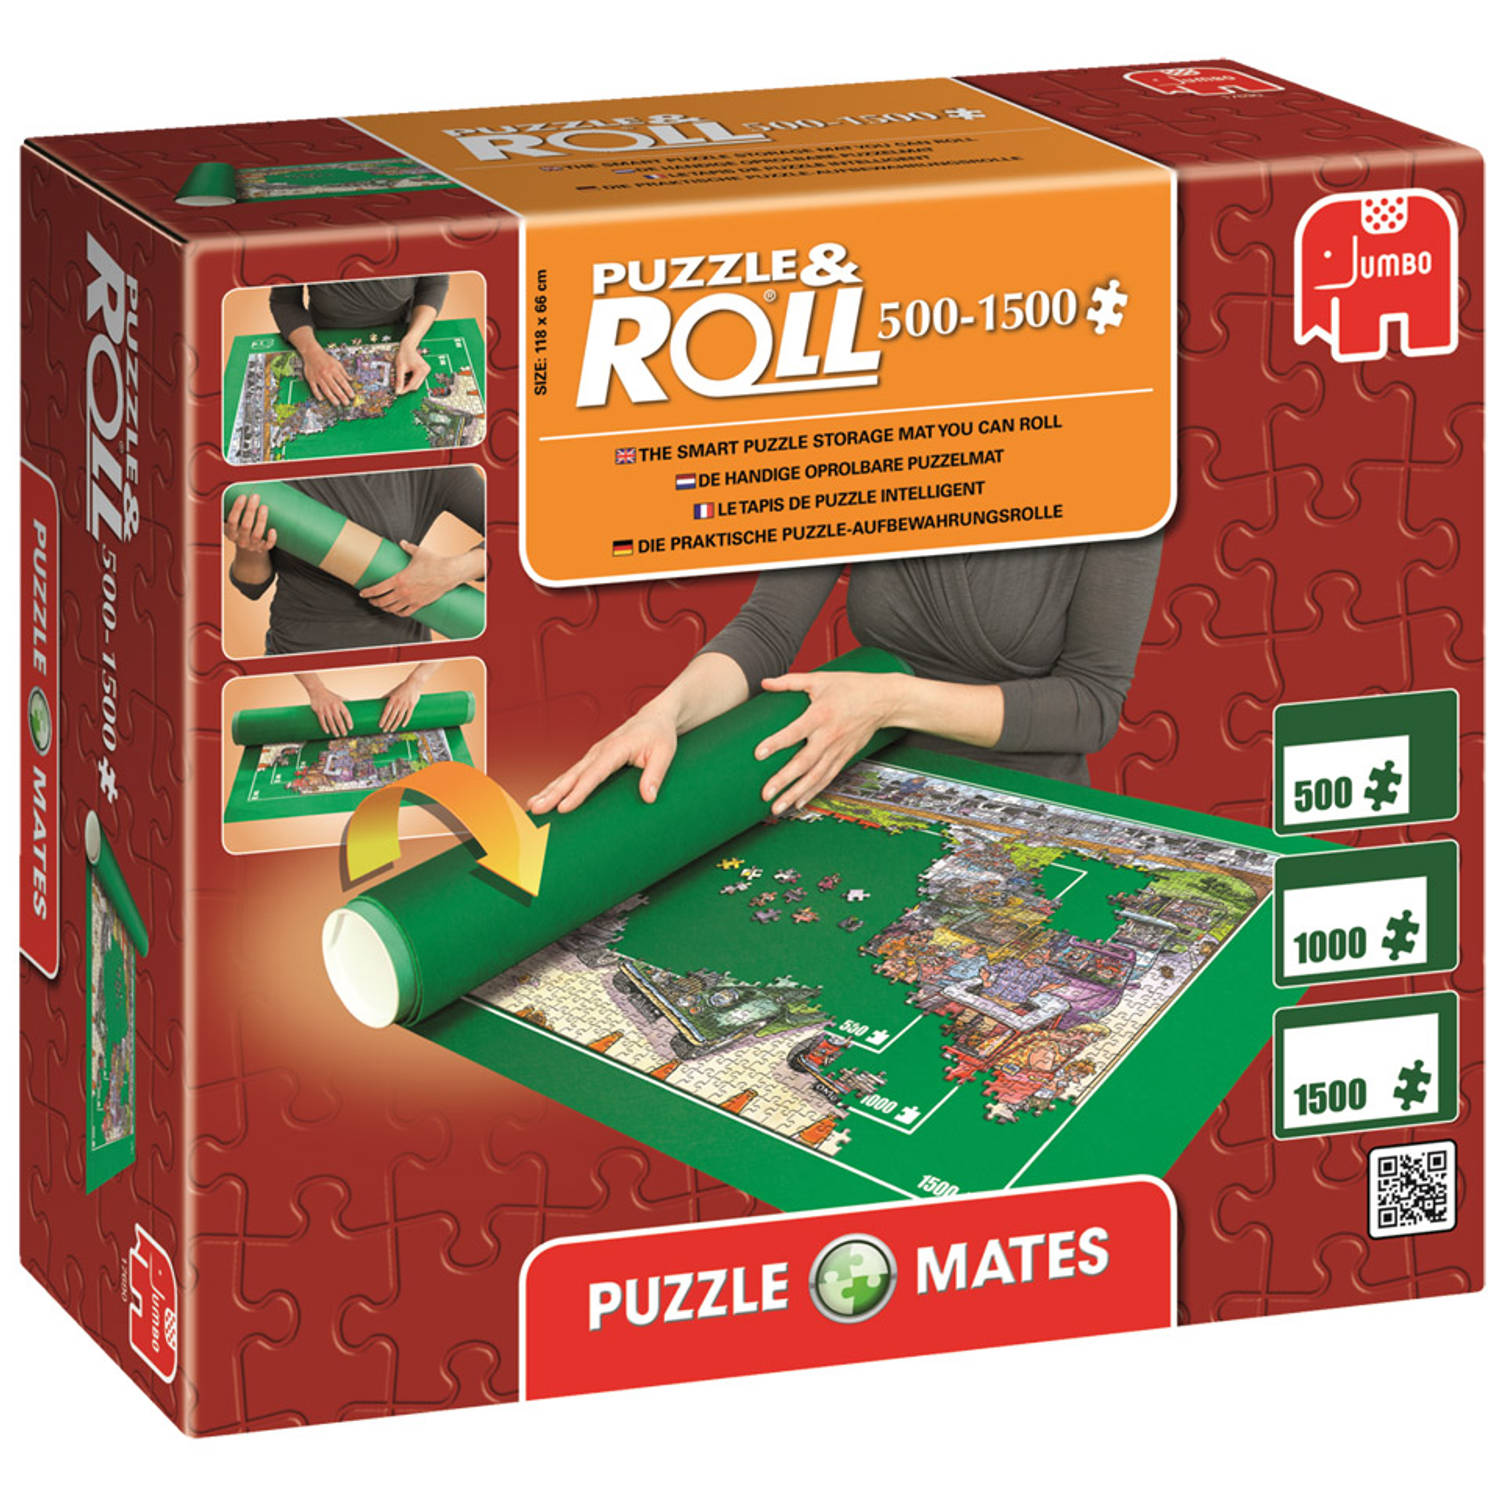 Puzzelmat, Puzzle & Roll 500-1500 stuks -